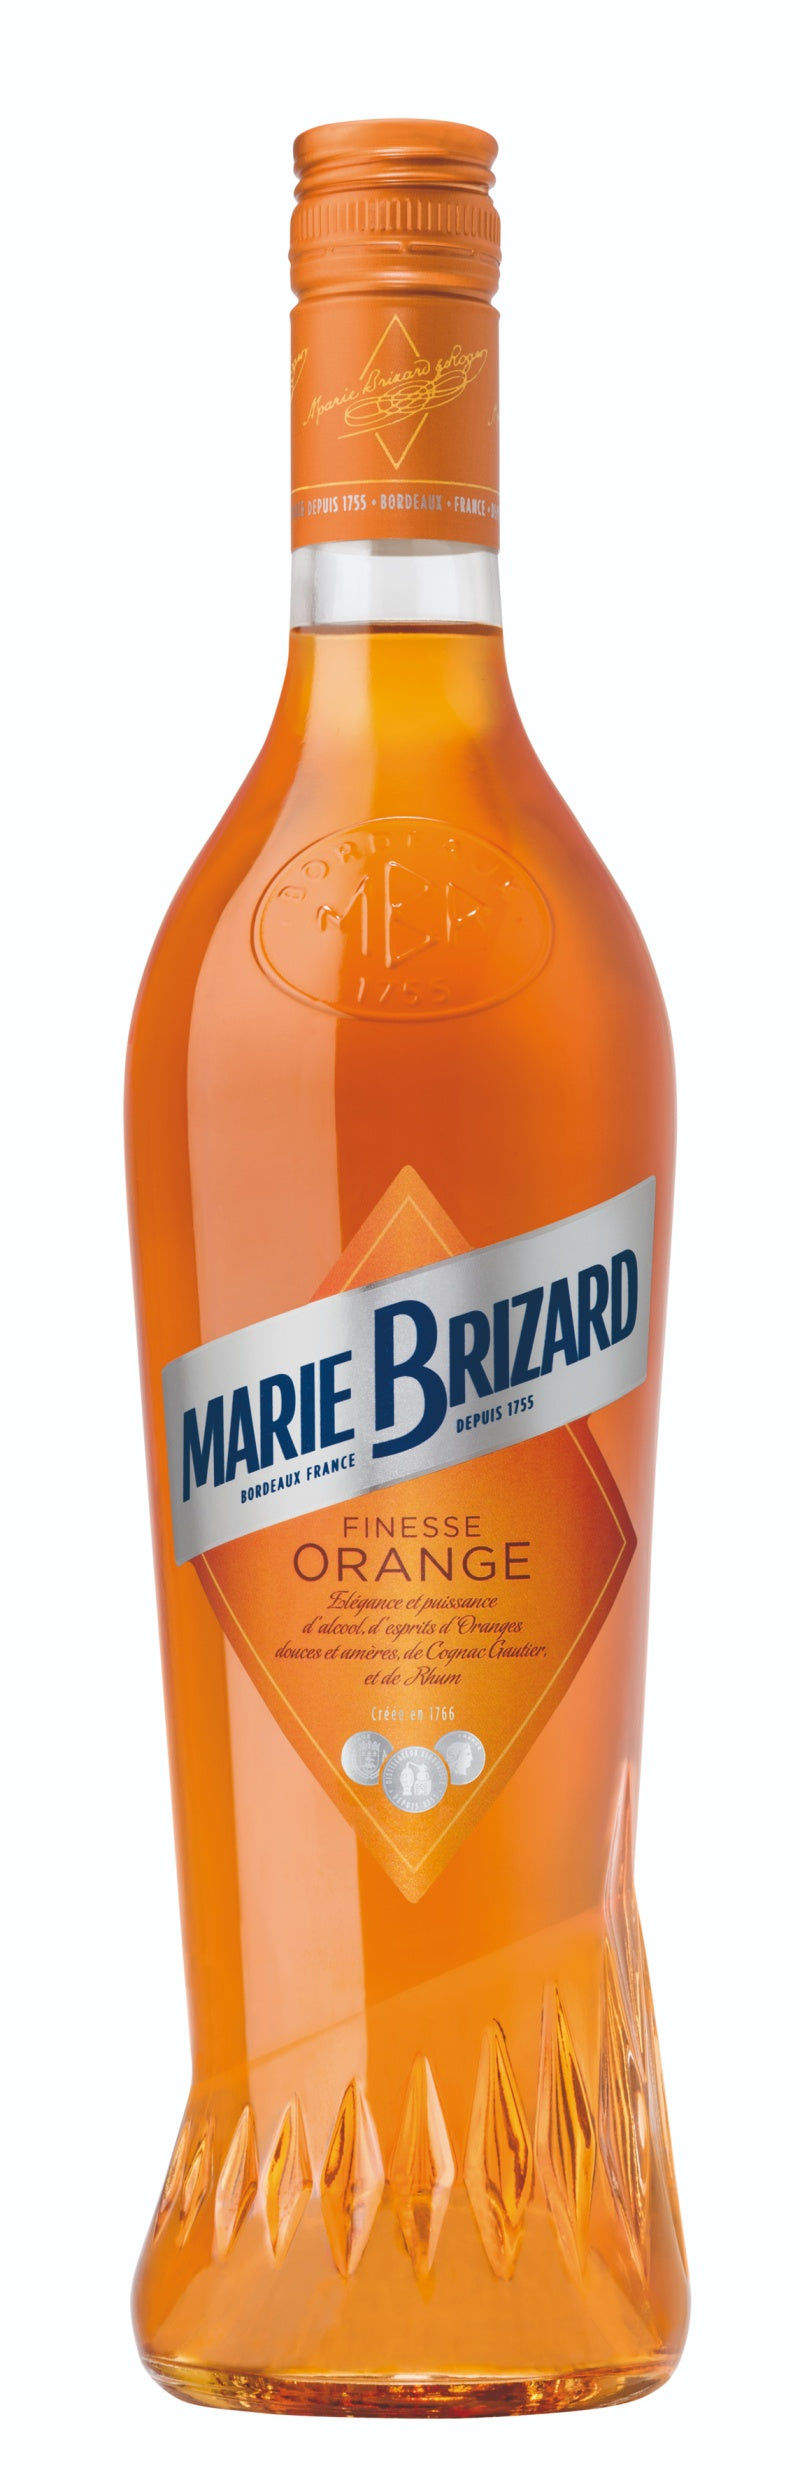 Marie Brizard Finess Orange  70cl